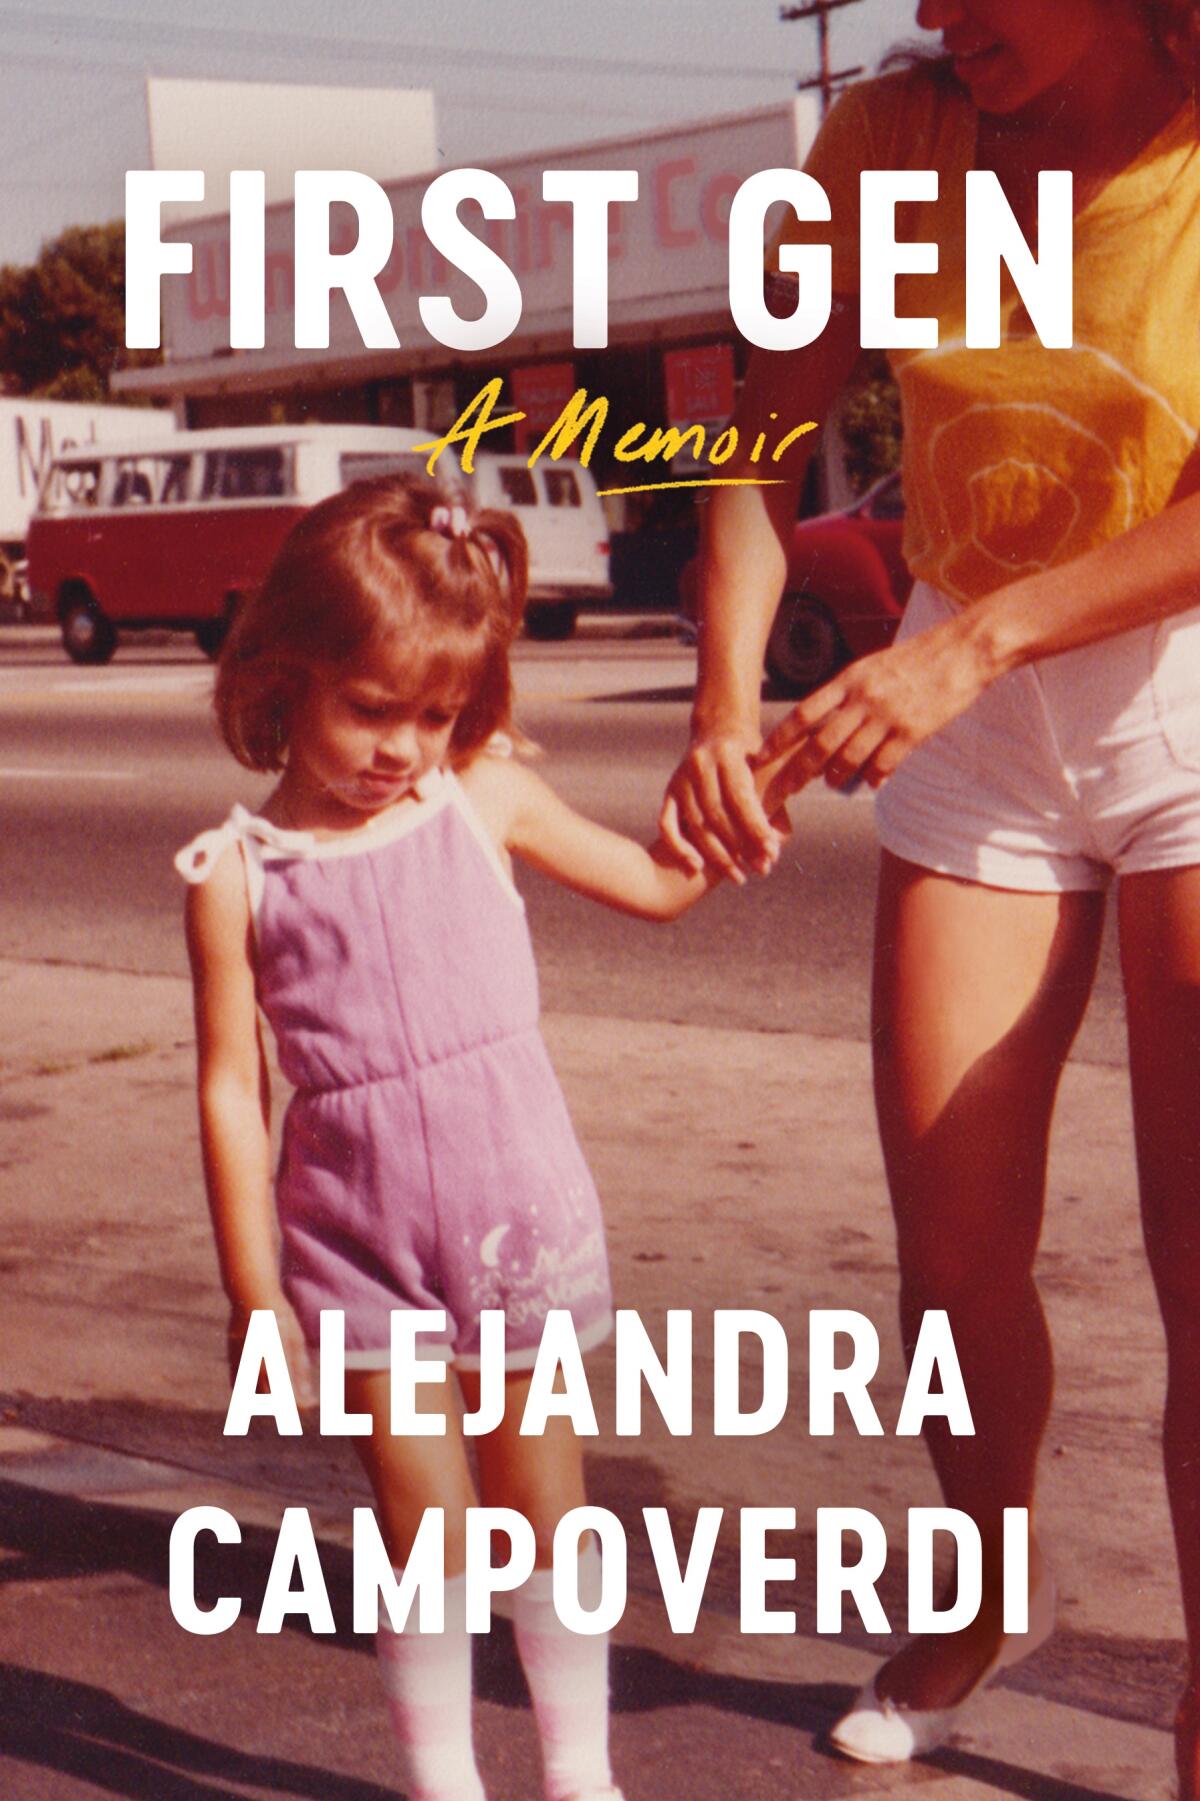 "First Gen: A Memoir," by Alejandra Campoverdi.